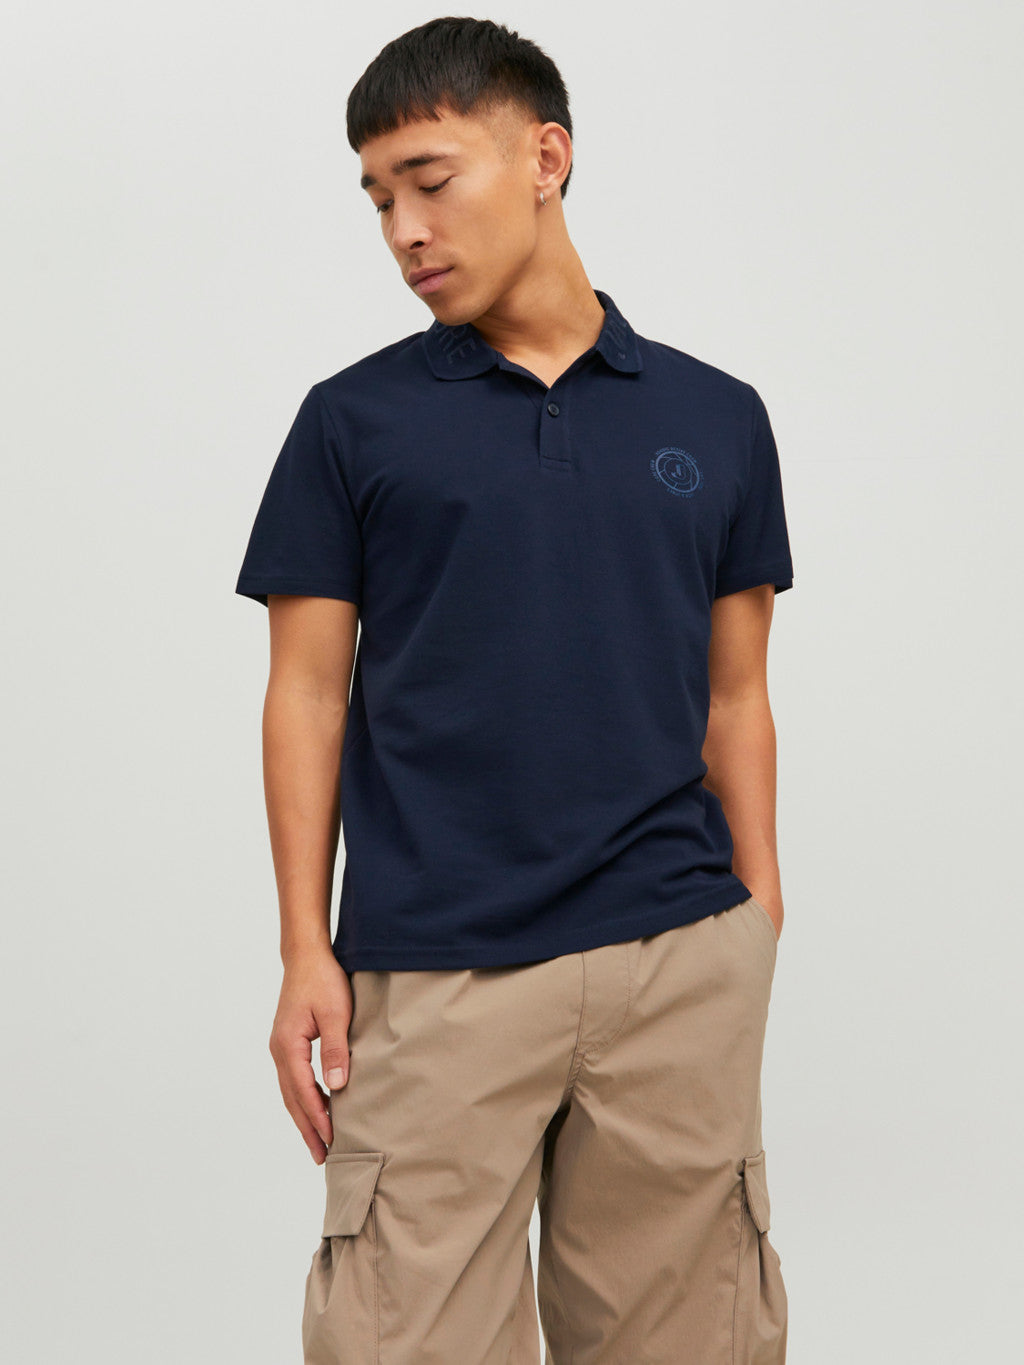 Chain Short Sleeve Navy Polo Shirt